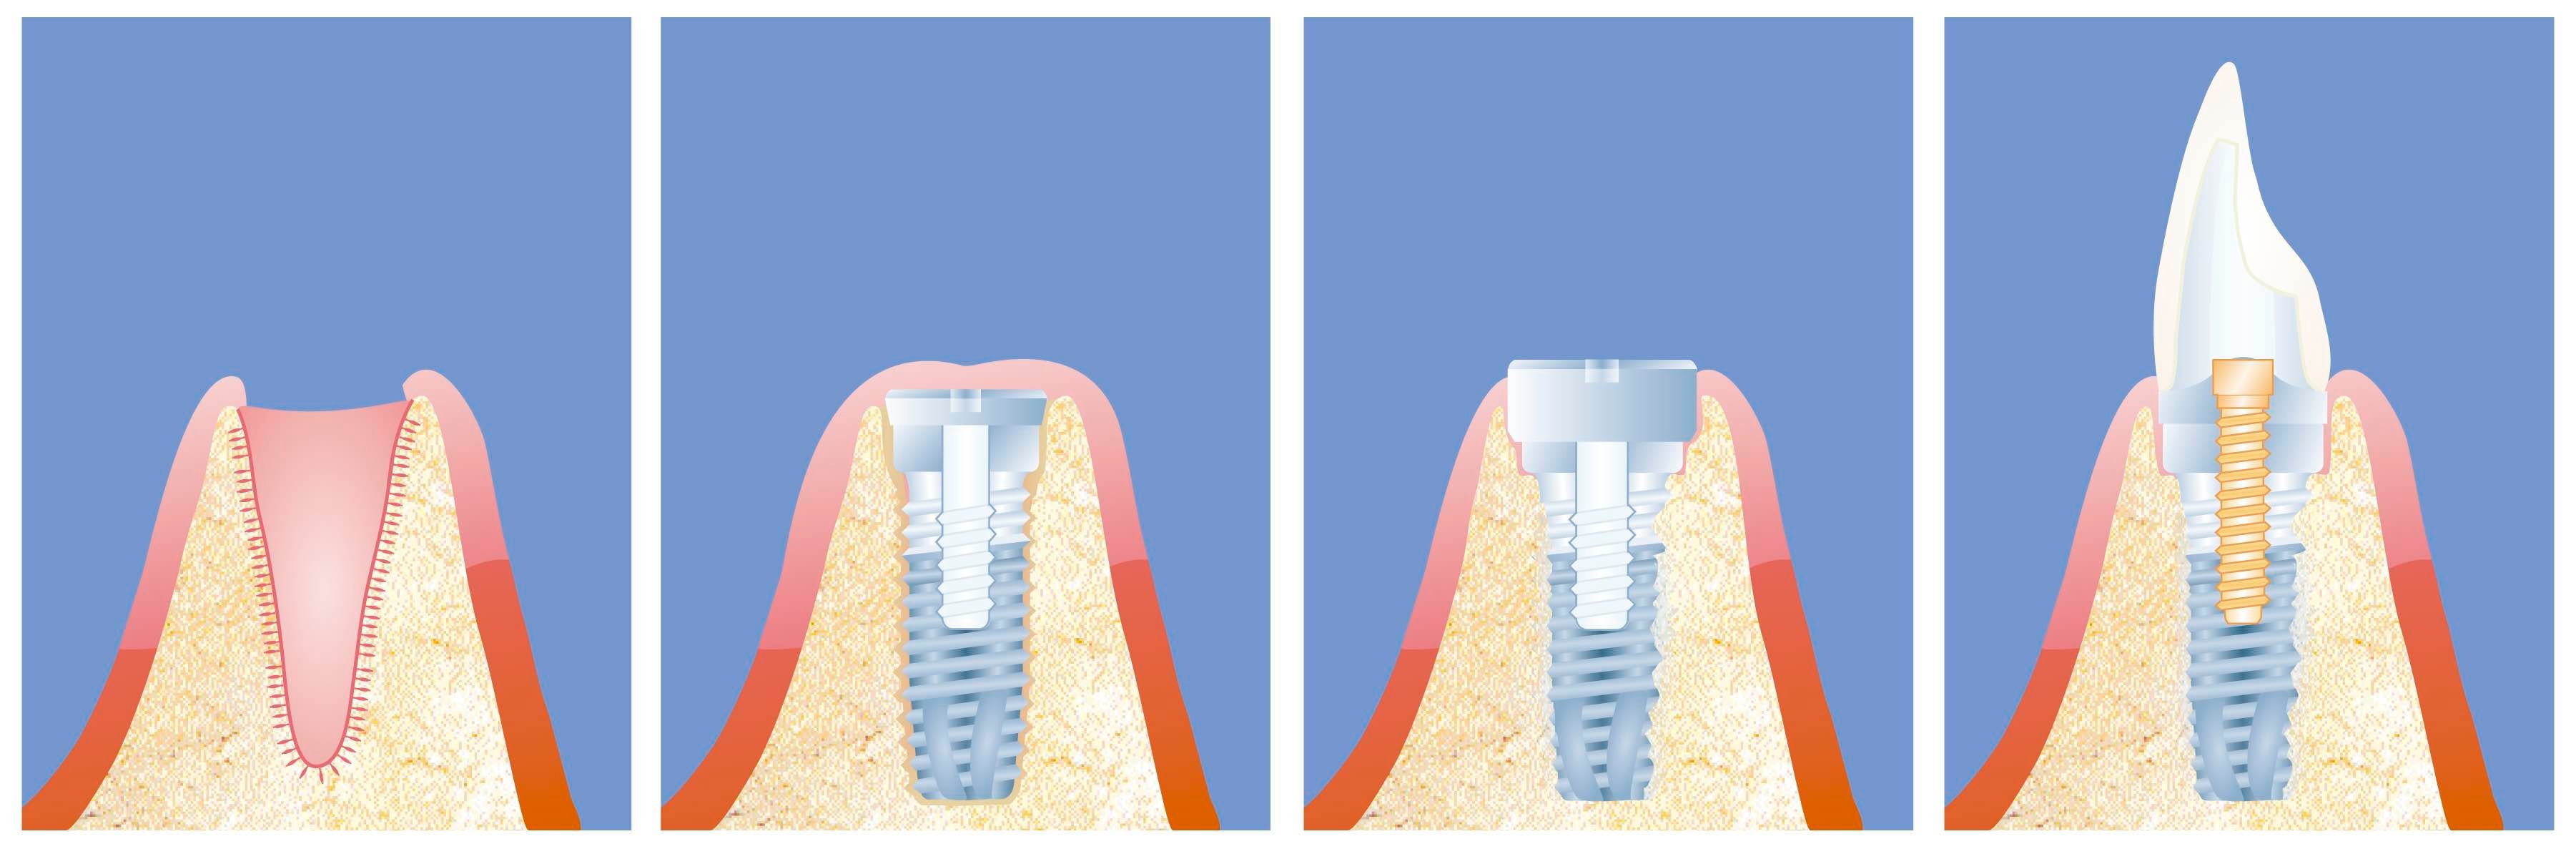 Dental implant - stages